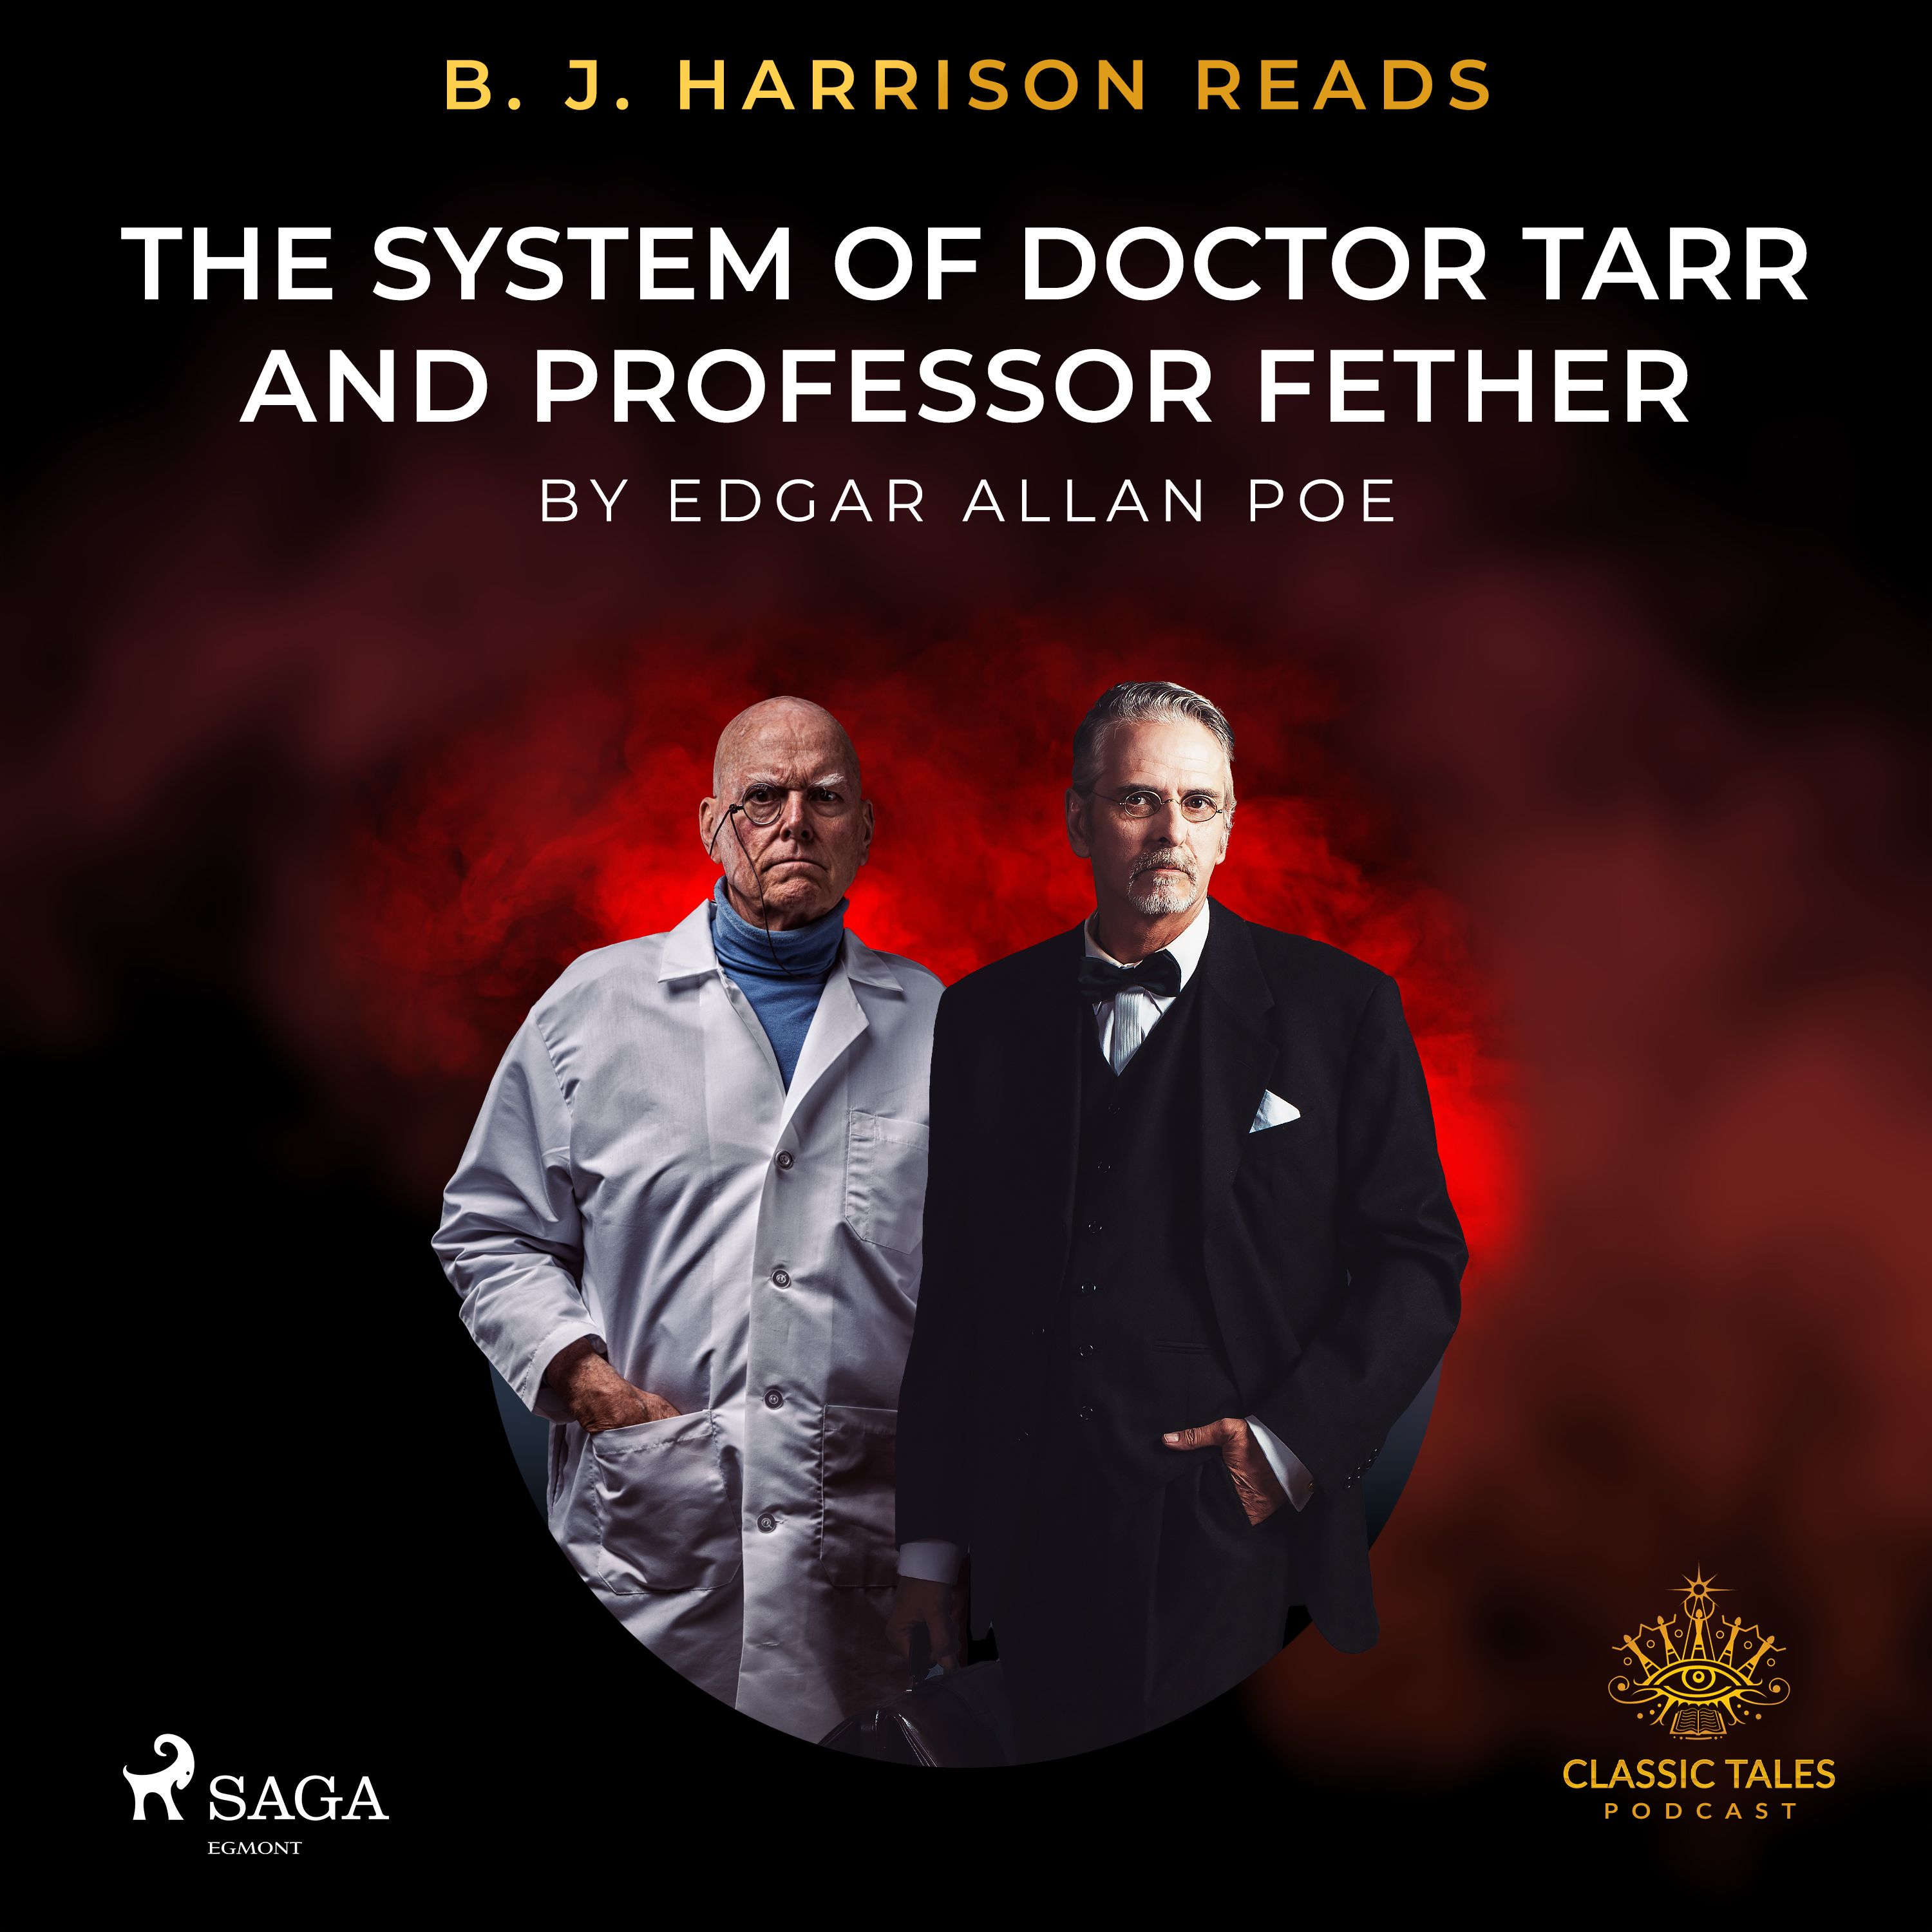 B. J. Harrison Reads The System of Doctor Tarr and Professor Fether, ljudbok av Edgar Allan Poe